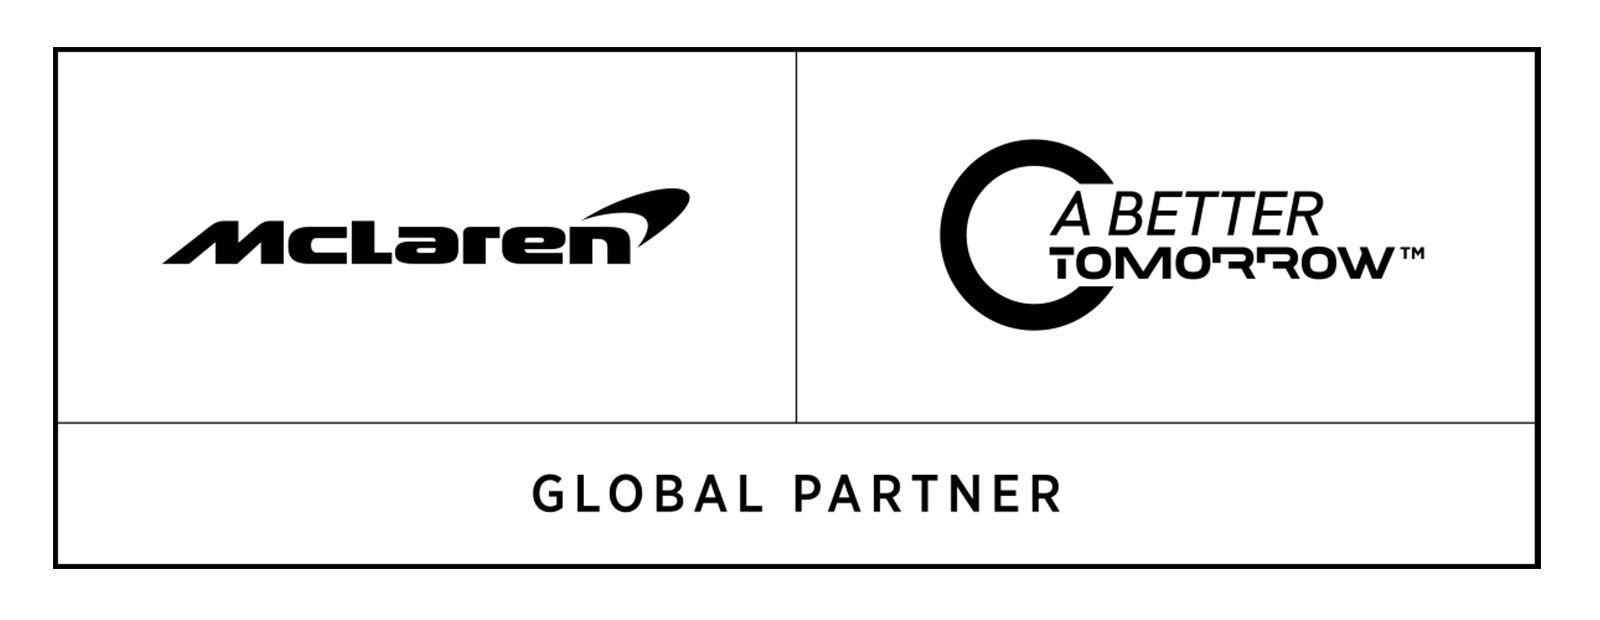 British American Tobacco Logo - McLaren Formula 1 Racing announces global partnership